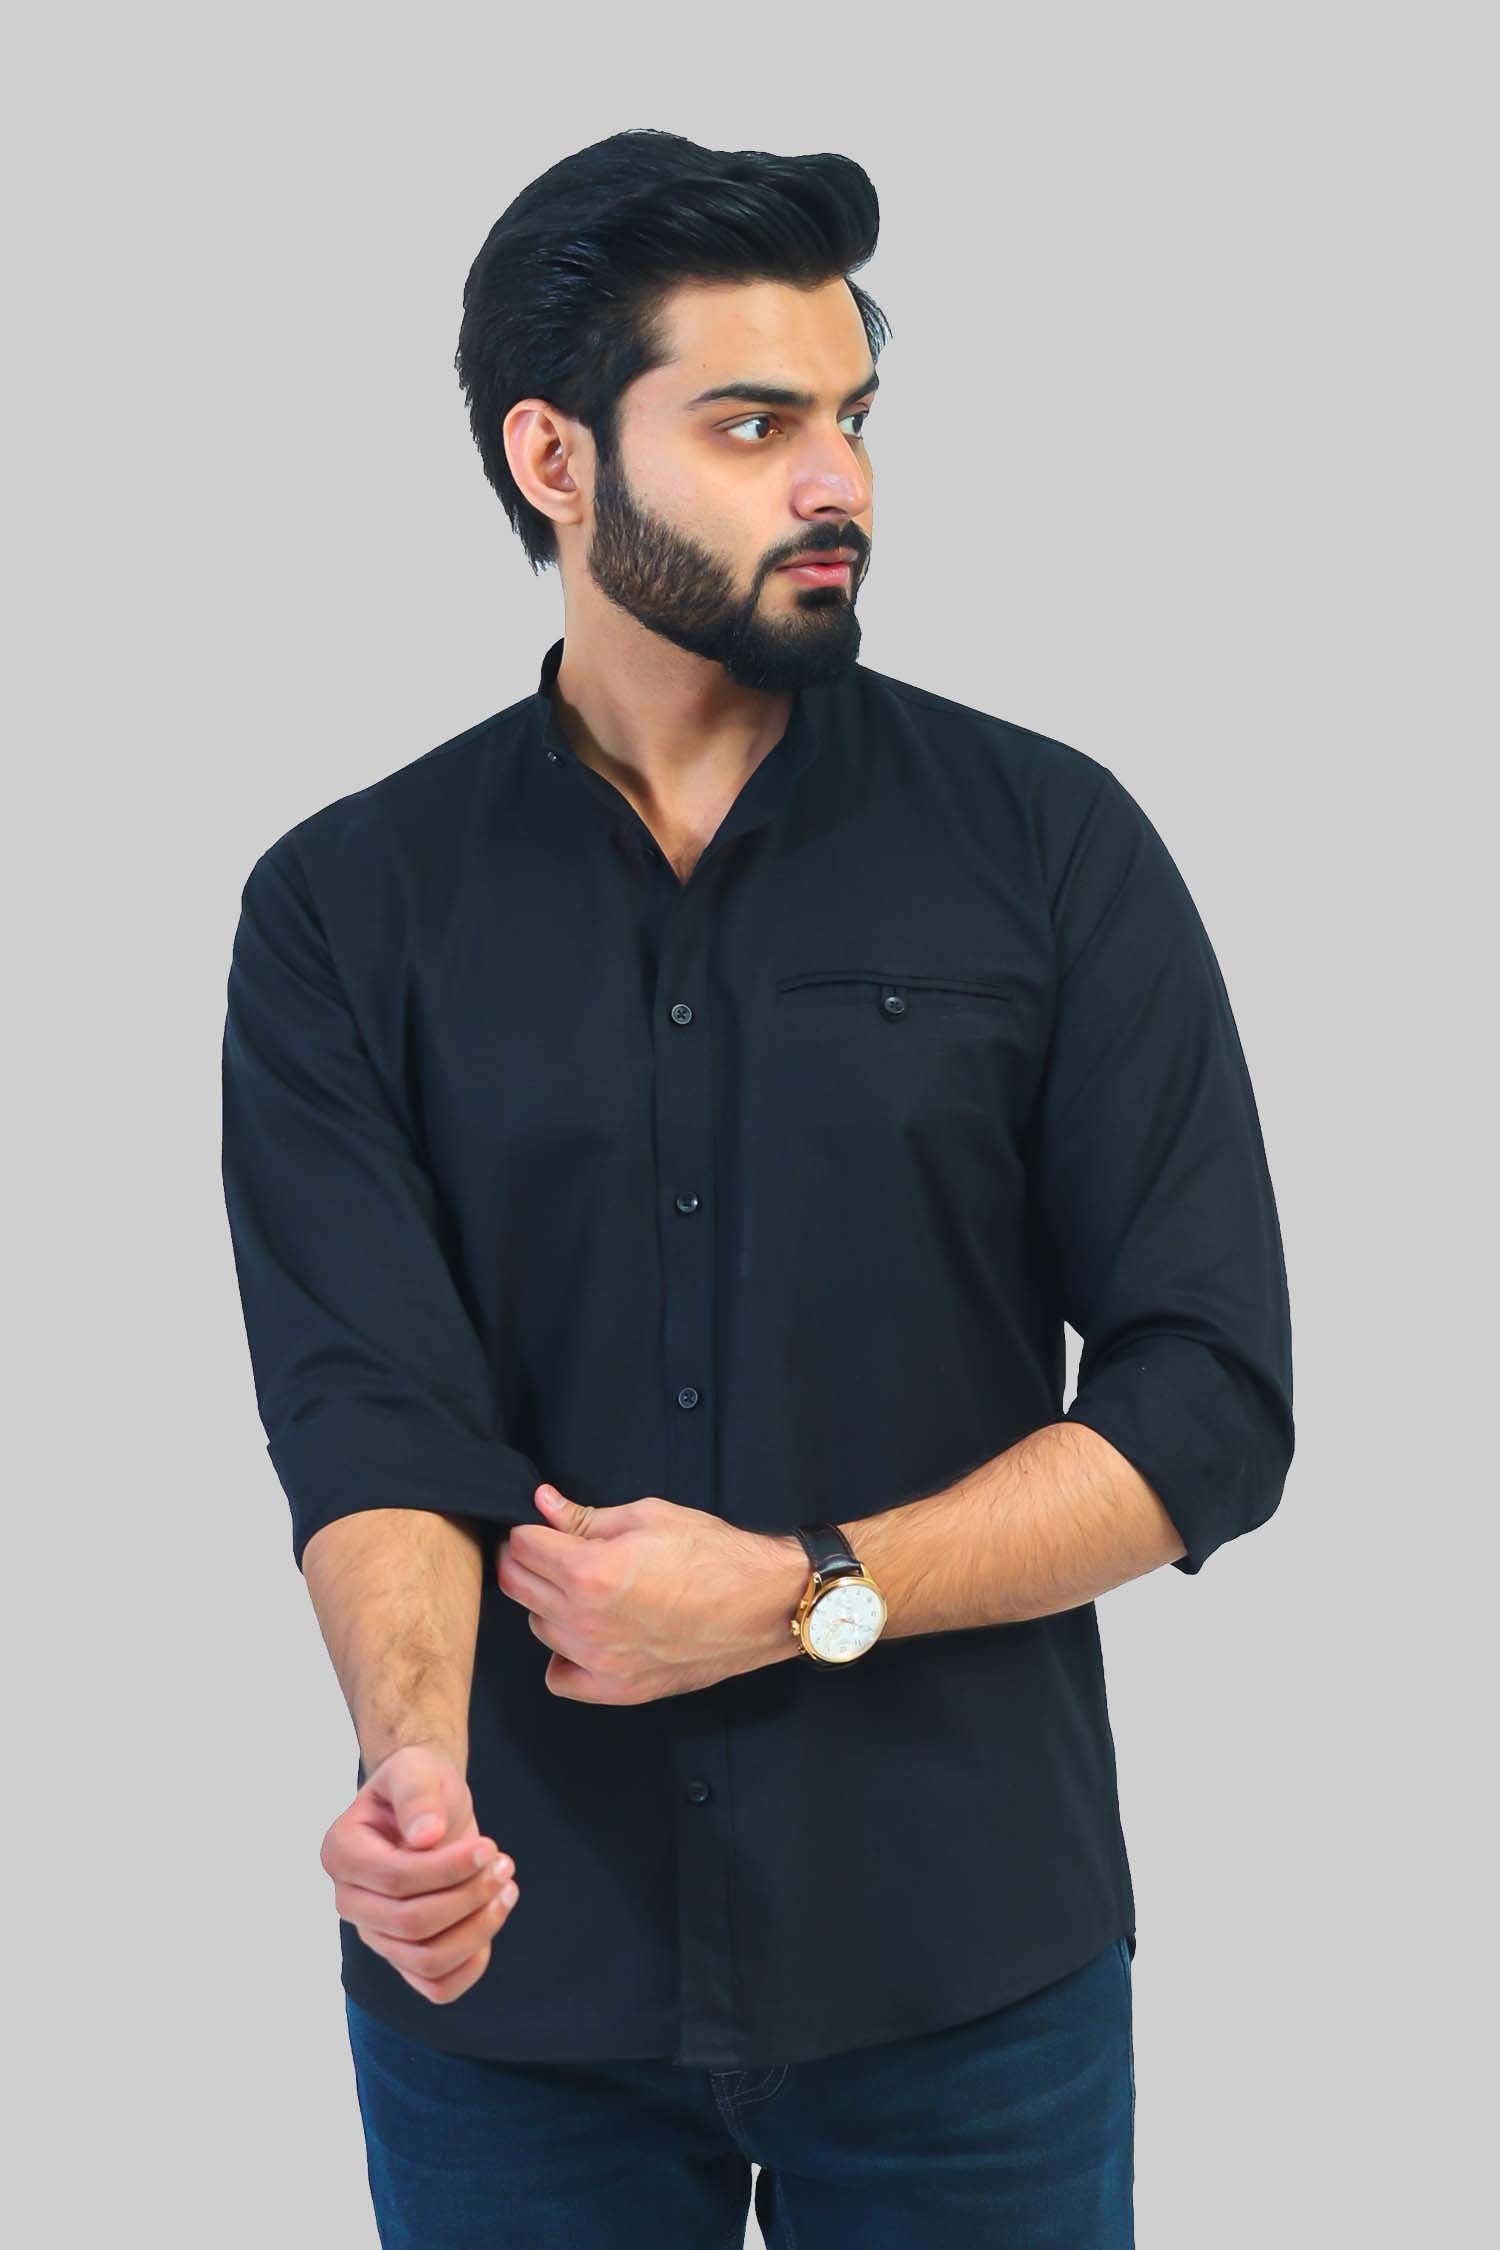 Black Shirt For Men - Veshbhoshaa